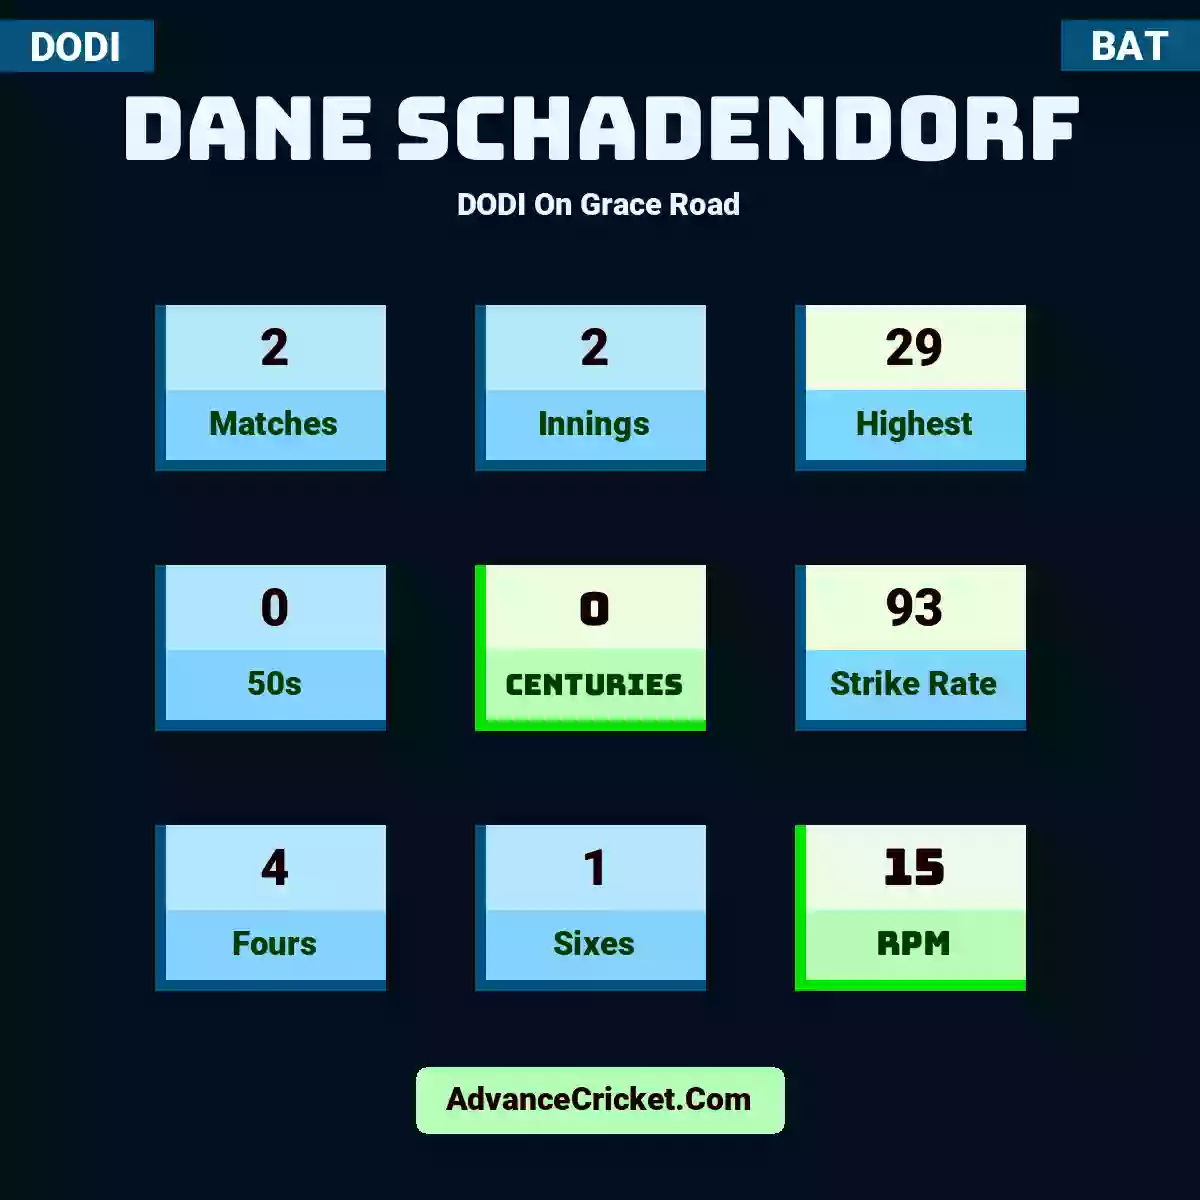 Dane Schadendorf DODI  On Grace Road, Dane Schadendorf played 2 matches, scored 29 runs as highest, 0 half-centuries, and 0 centuries, with a strike rate of 93. D.Schadendorf hit 4 fours and 1 sixes, with an RPM of 15.